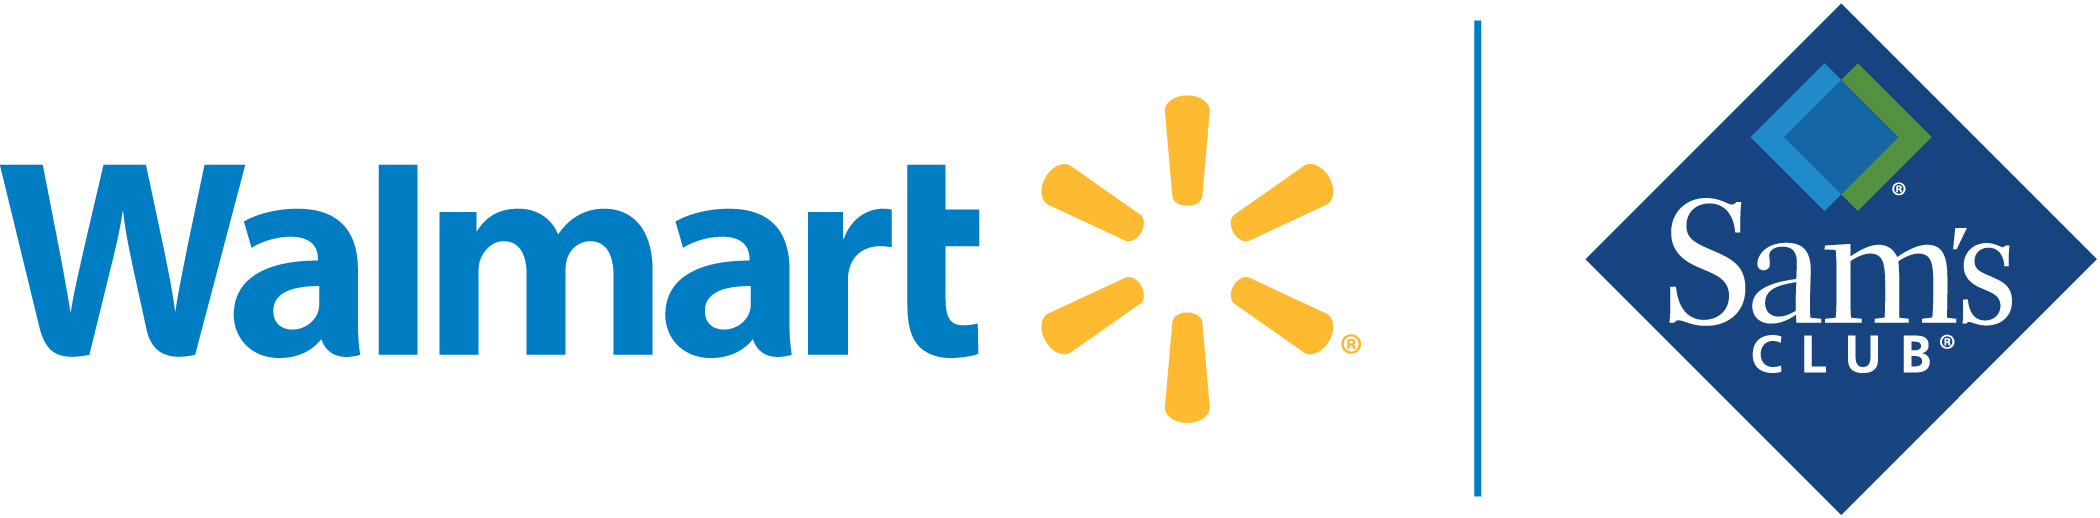 Walmart & Sam's Club logos